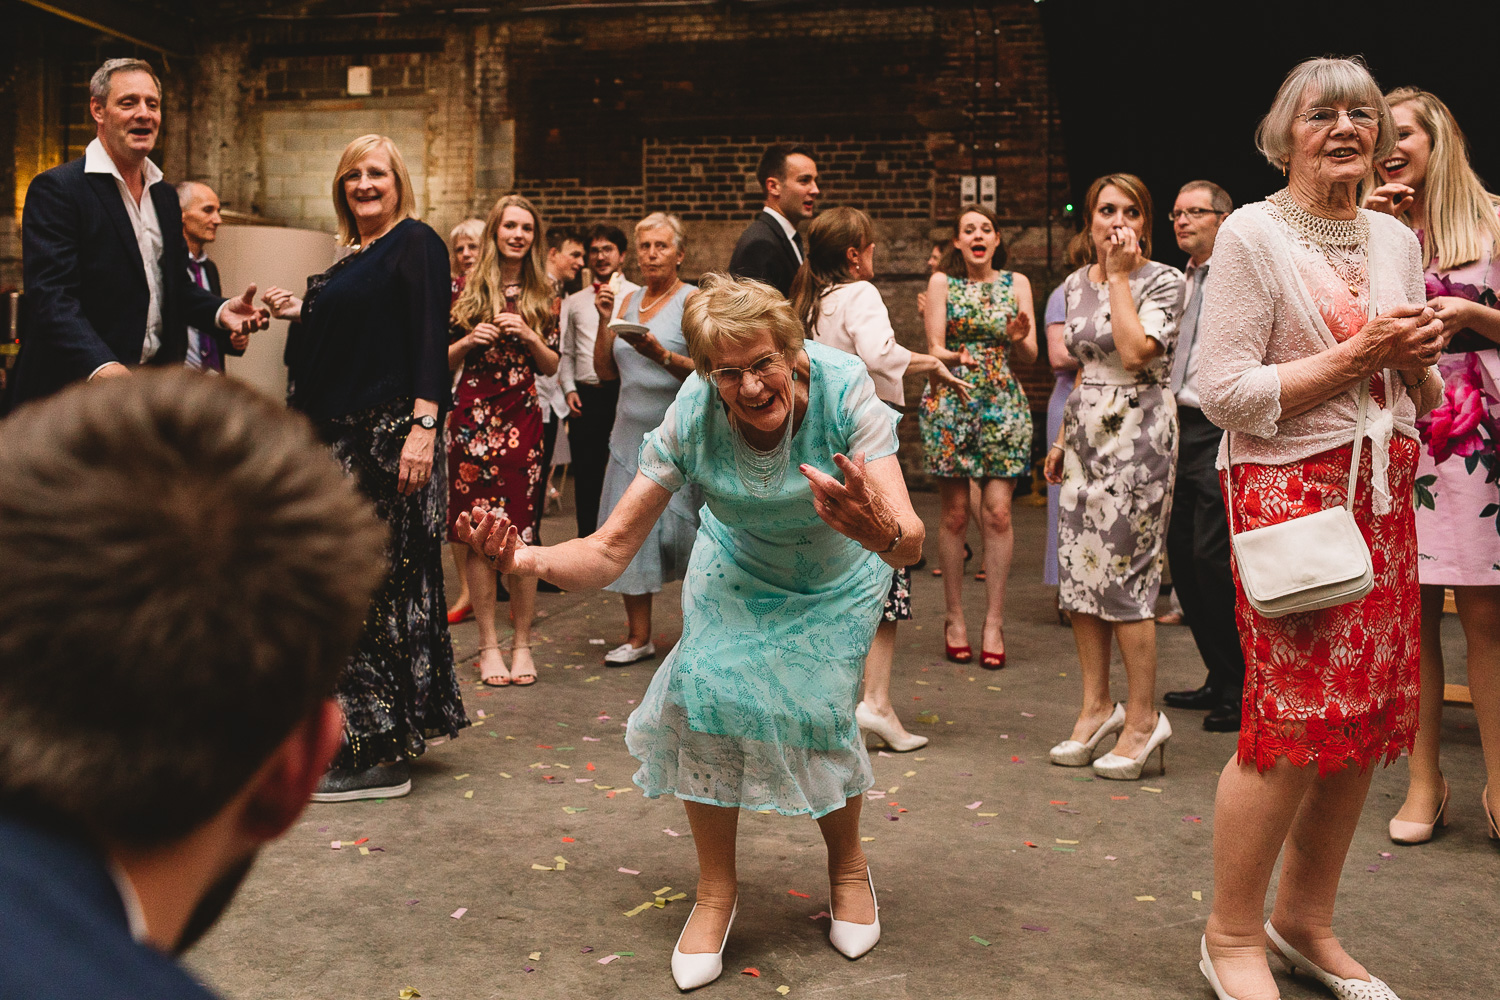 Granny in mint green dress having a boogie at fun wedding party at alternative warehouse wedding venue 92 burton road